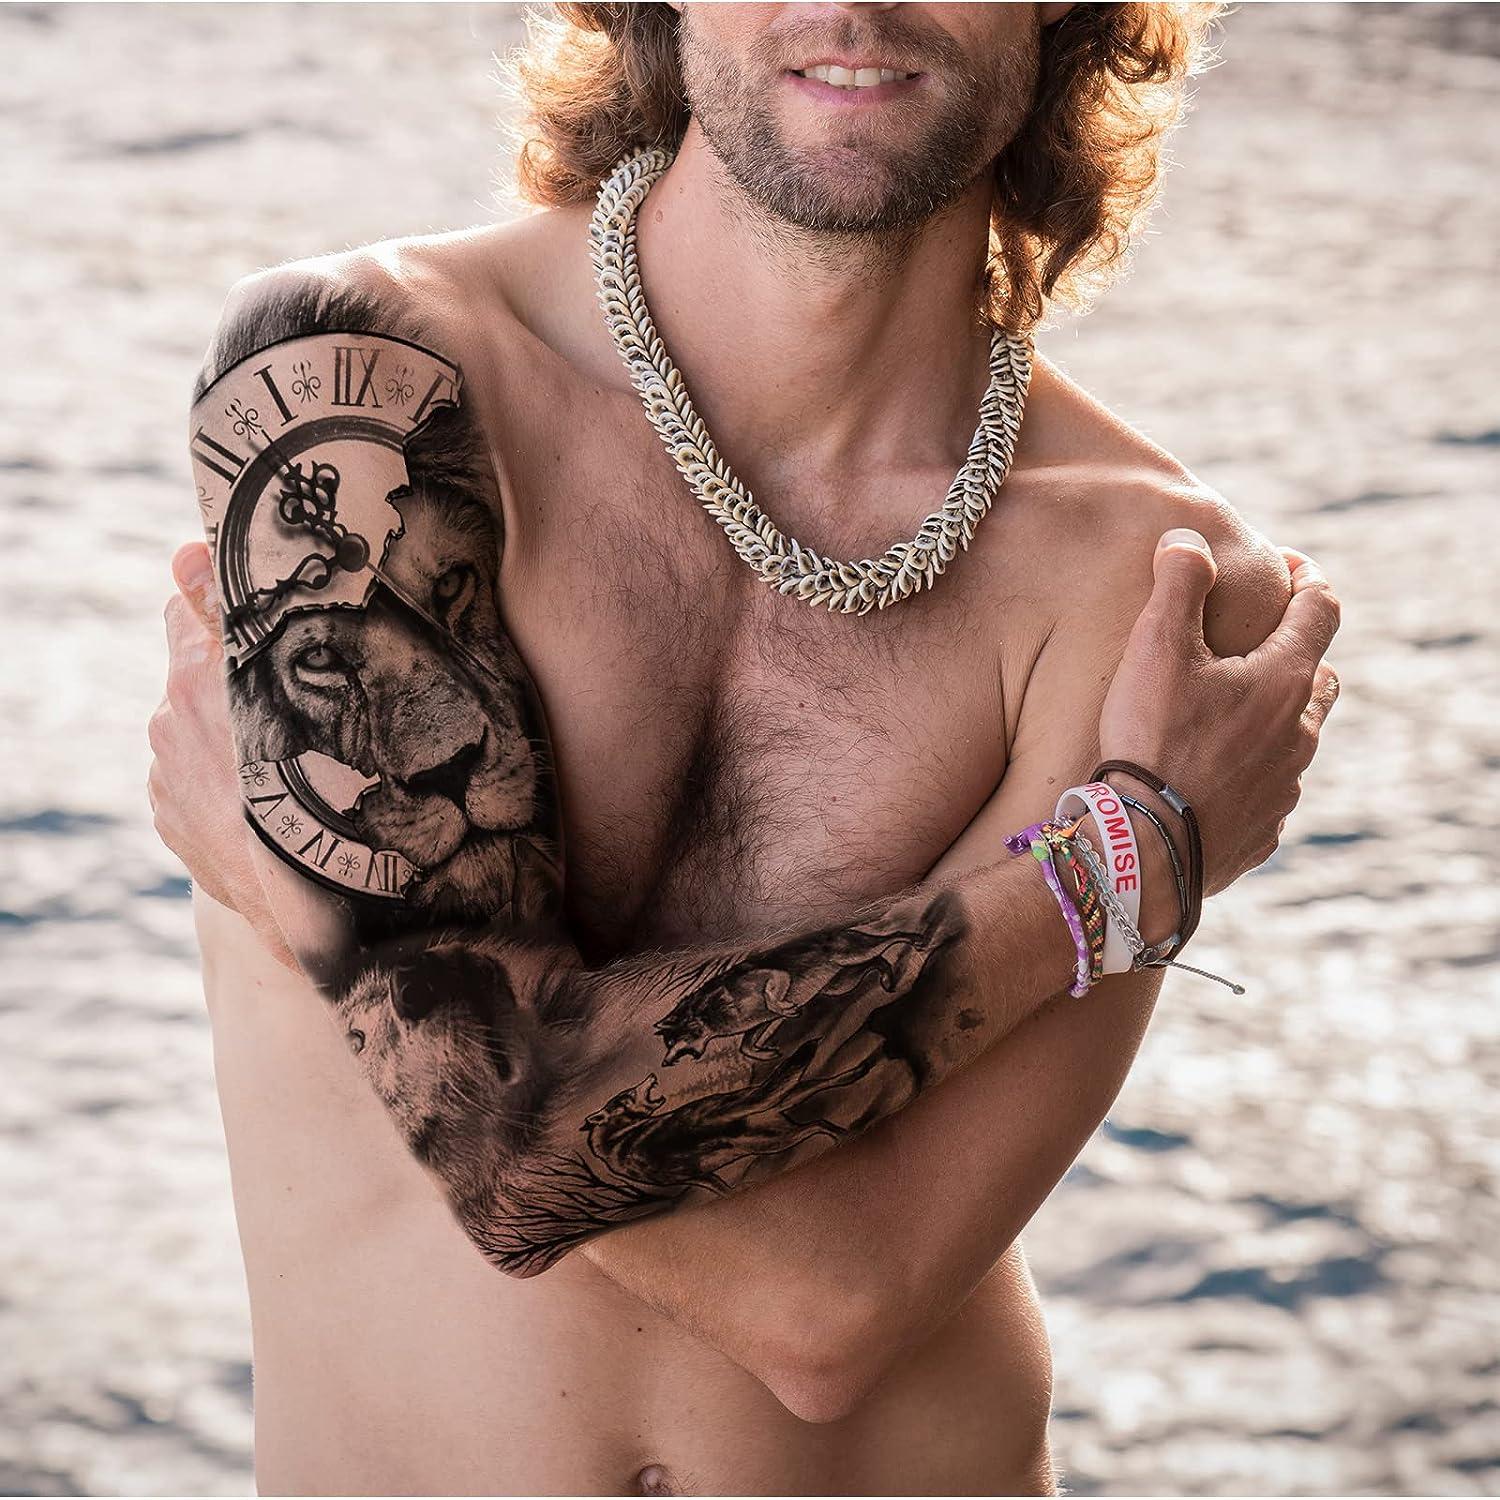 Bracelet Tattoos | Wrist tattoos for guys, Wrap around wrist tattoos, Wrist  bracelet tattoo